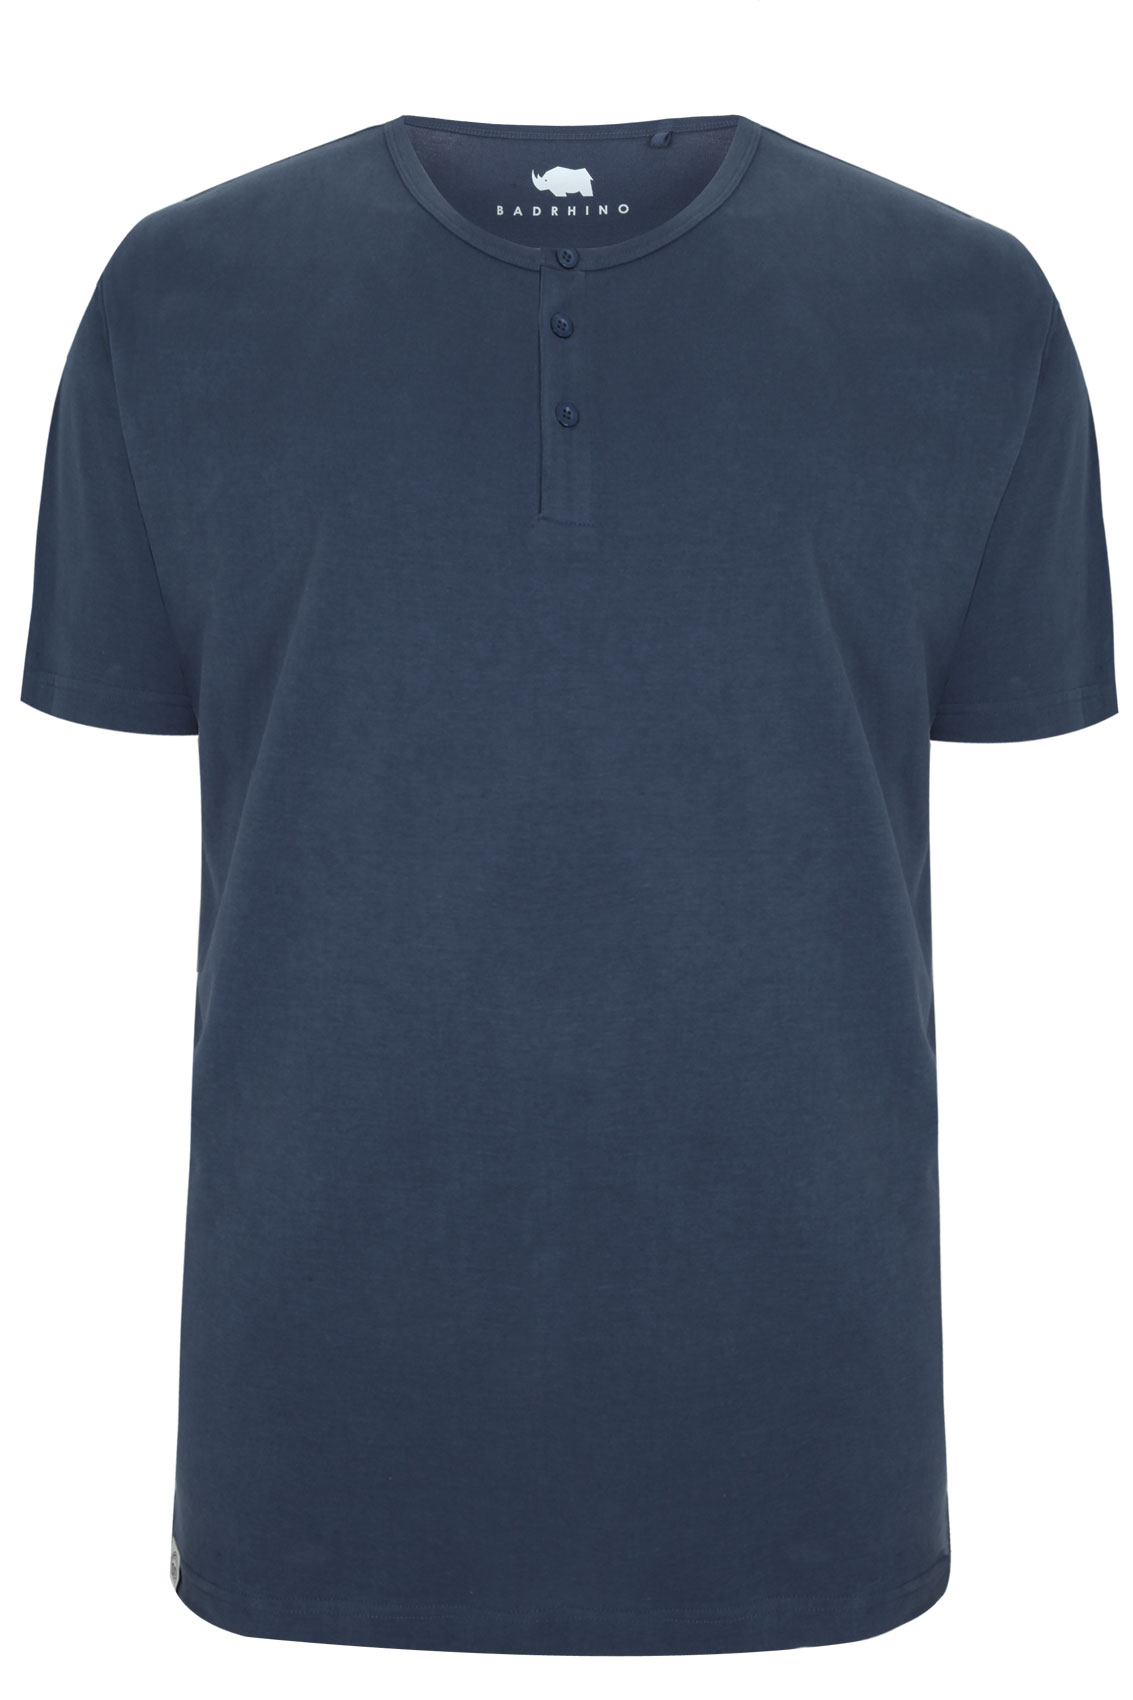 BadRhino Denim Blue Short Sleeve Grandad T-Shirt sizes L to 8XL